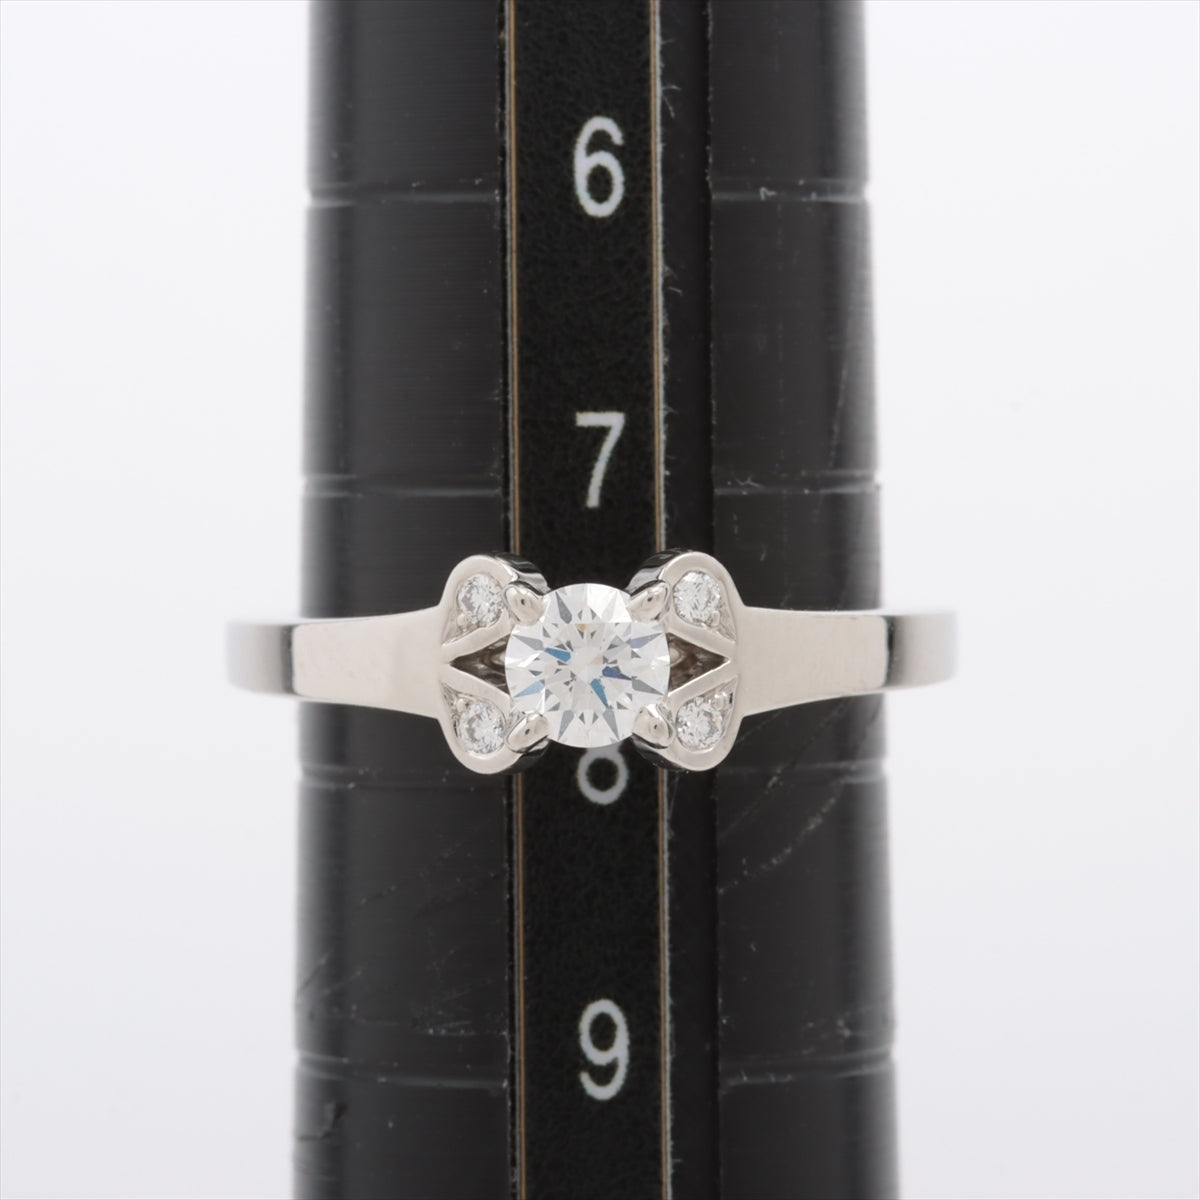 Cartier Ballerina Diamond Ring Pt950 4.8g 0.24 D VS1 3EX NONE 48 CRN4197549